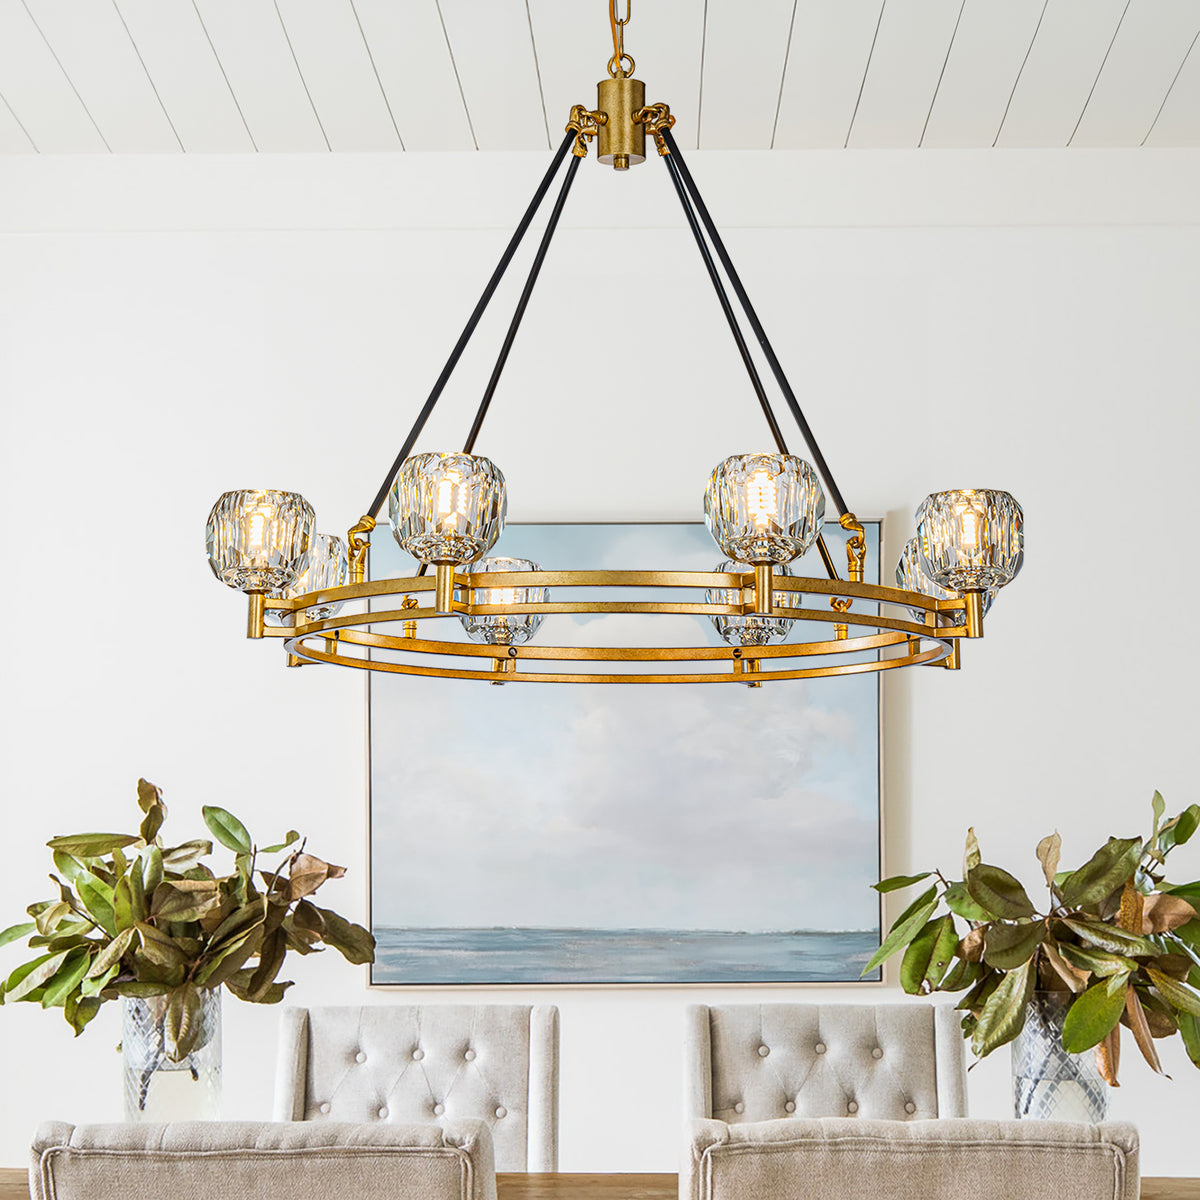 Modern/Contemporary 8-Light Antique Gold Facet-cut Crystal Chandelier Vintage Dining Room Pendant Light Fixtures